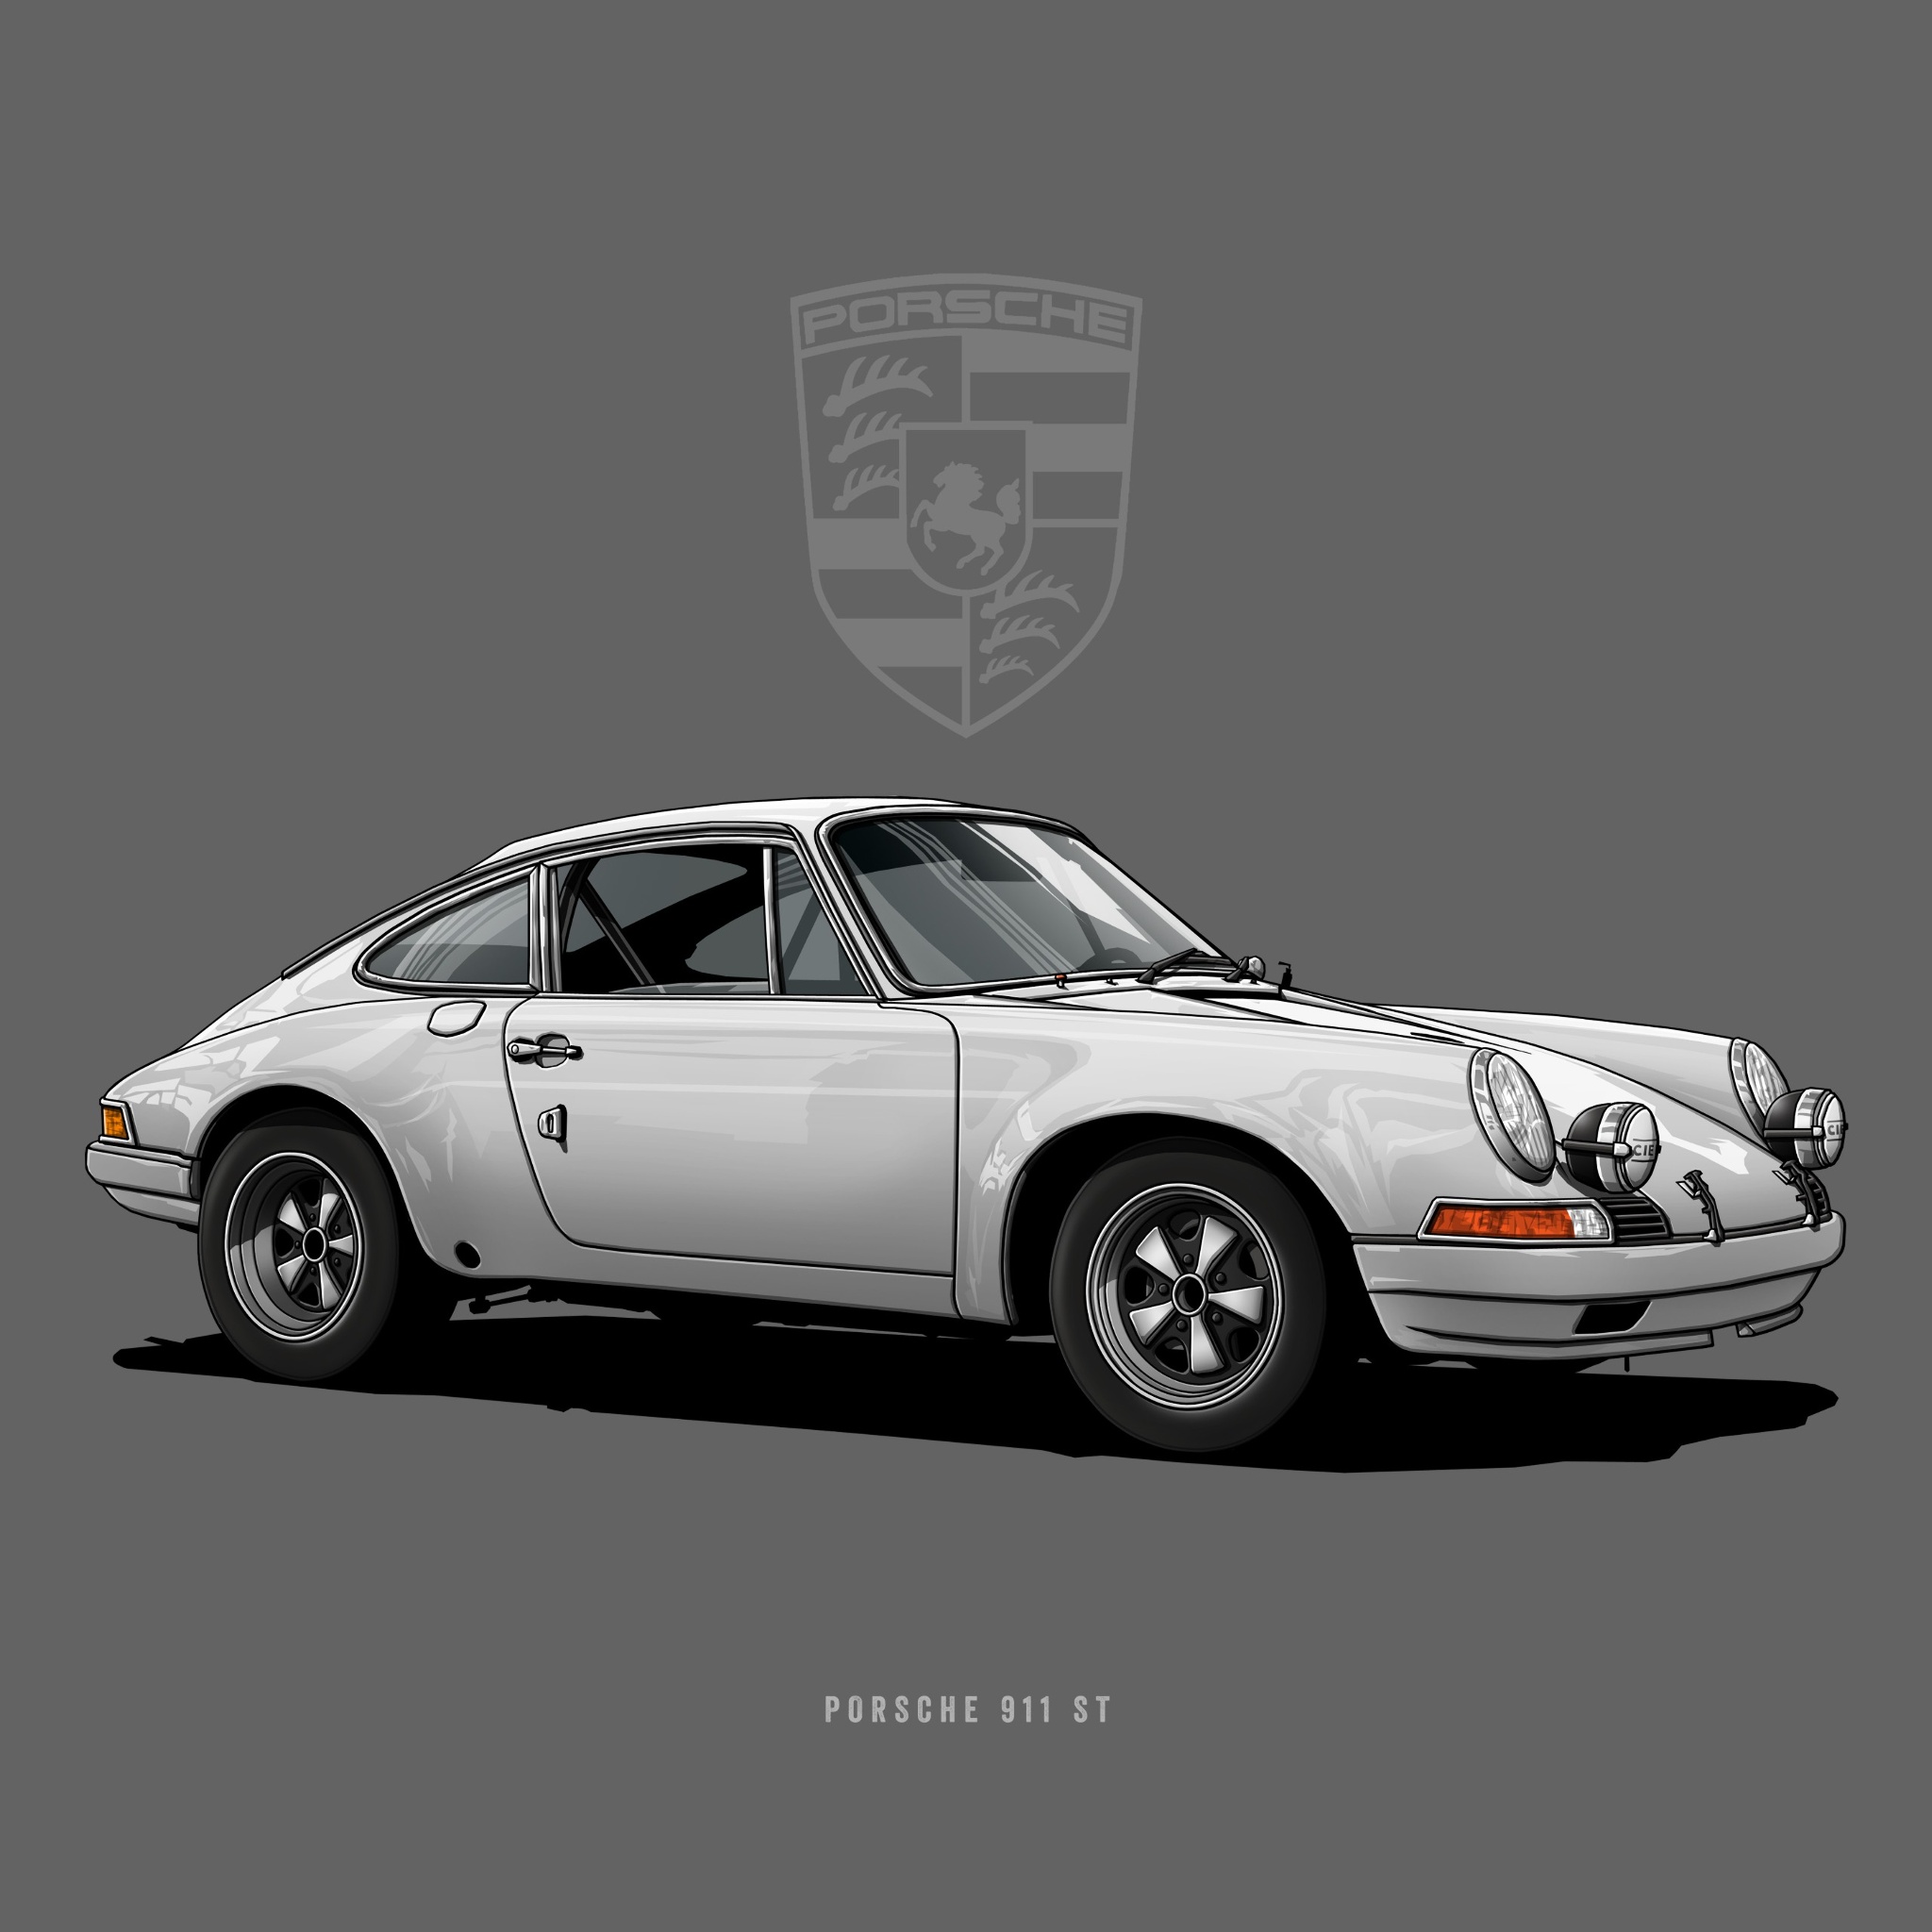 Porsche 911 ST By Helge Jepsen